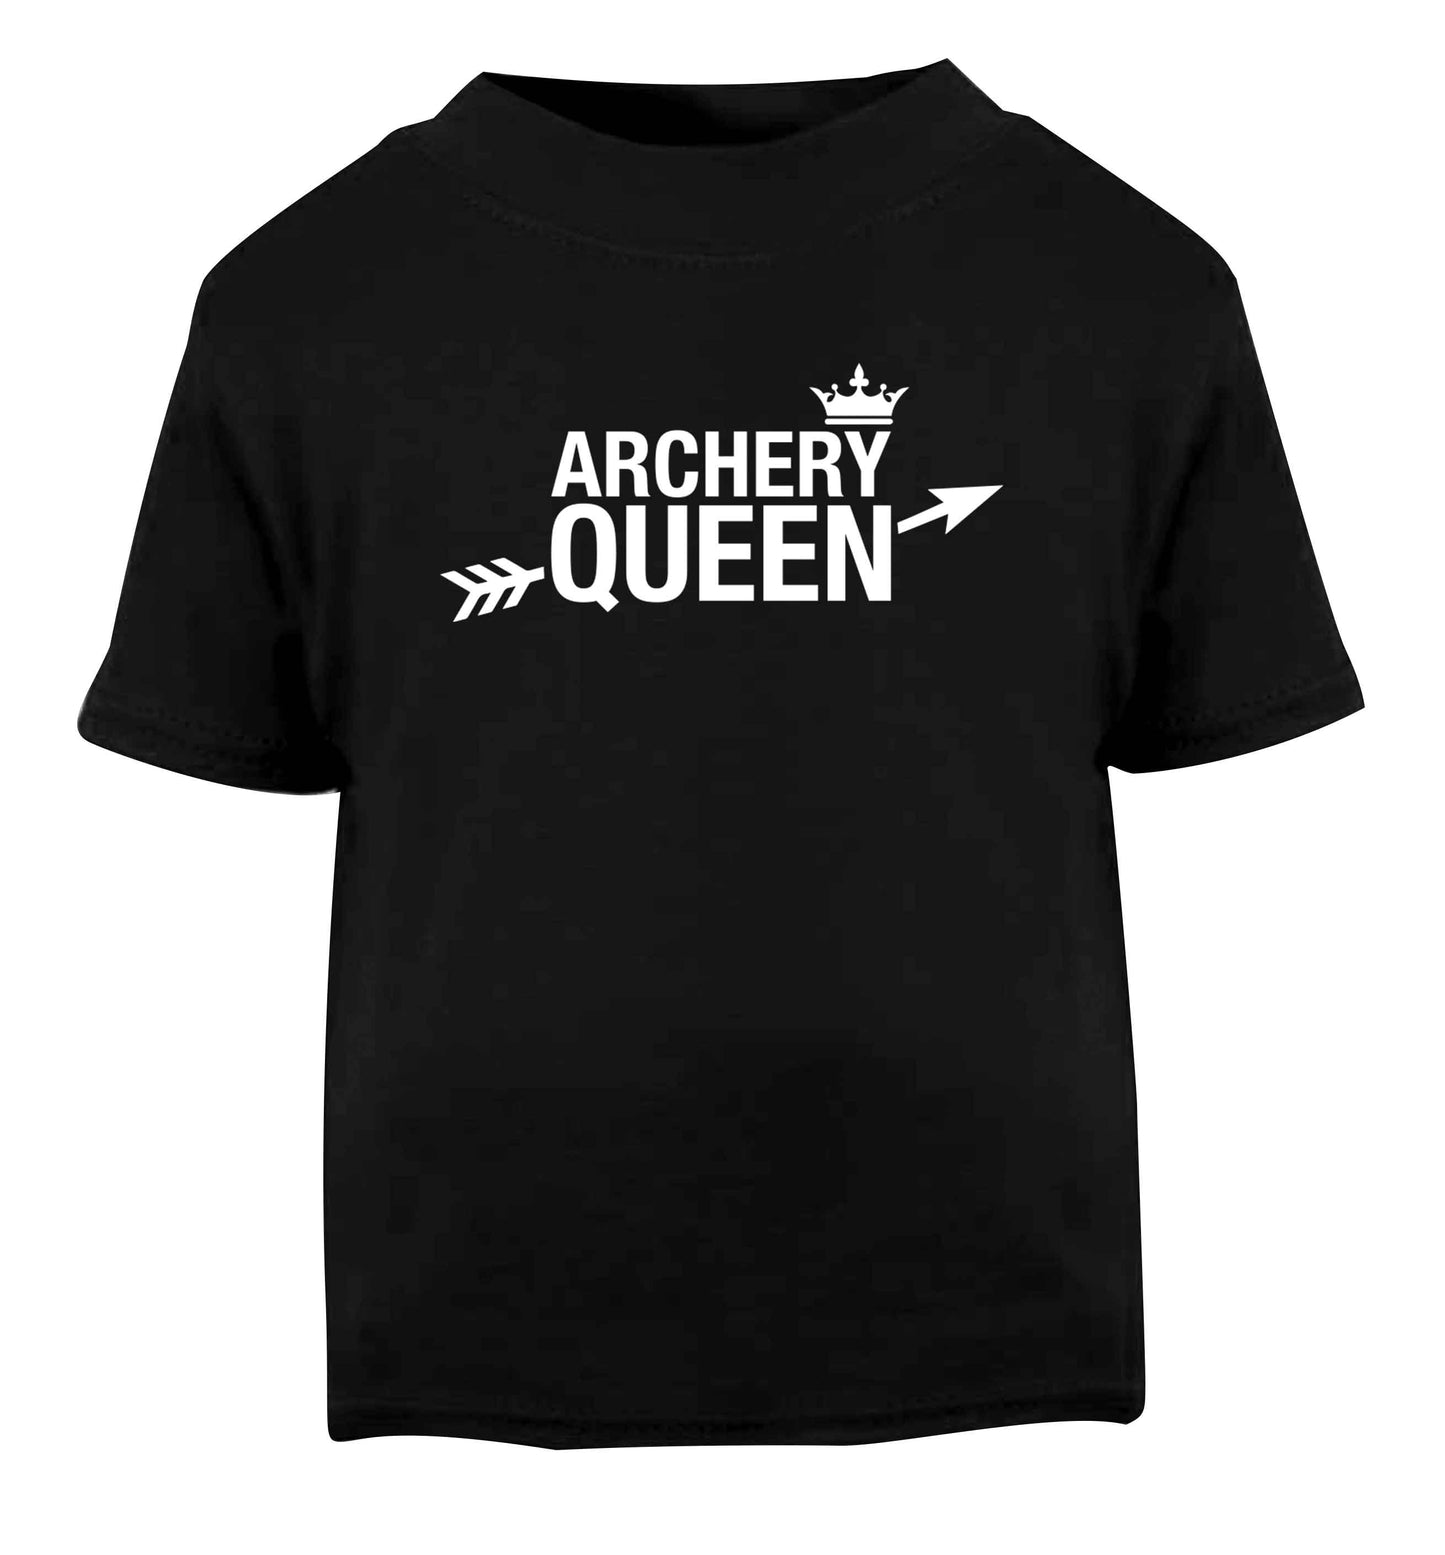 Archery queen Black Baby Toddler Tshirt 2 years